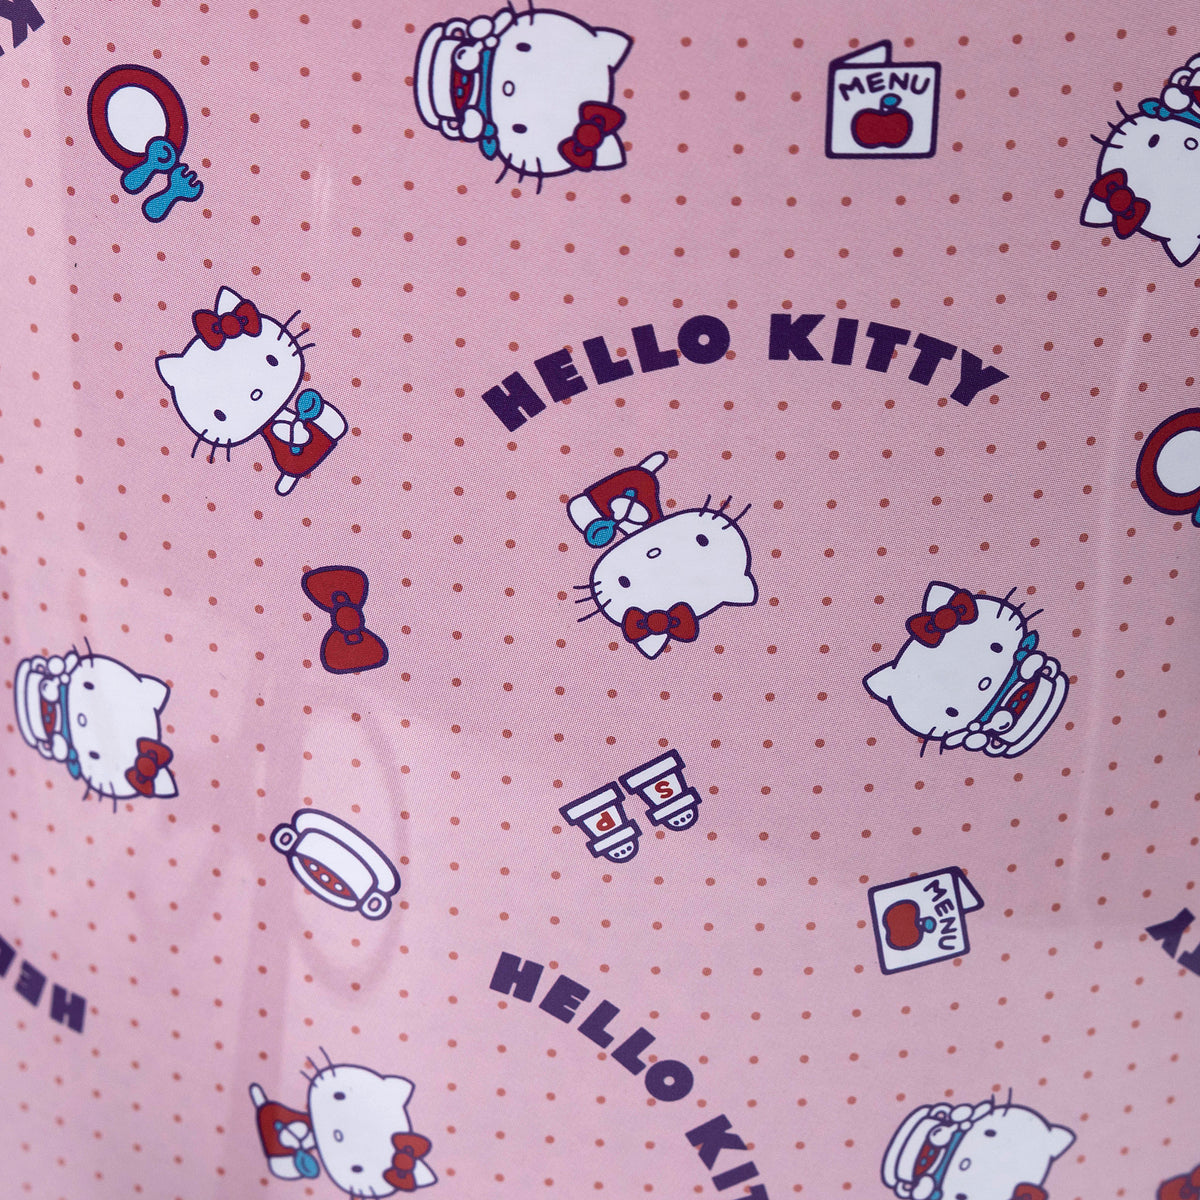 Hello Kitty 2-Quart Slow Cooker